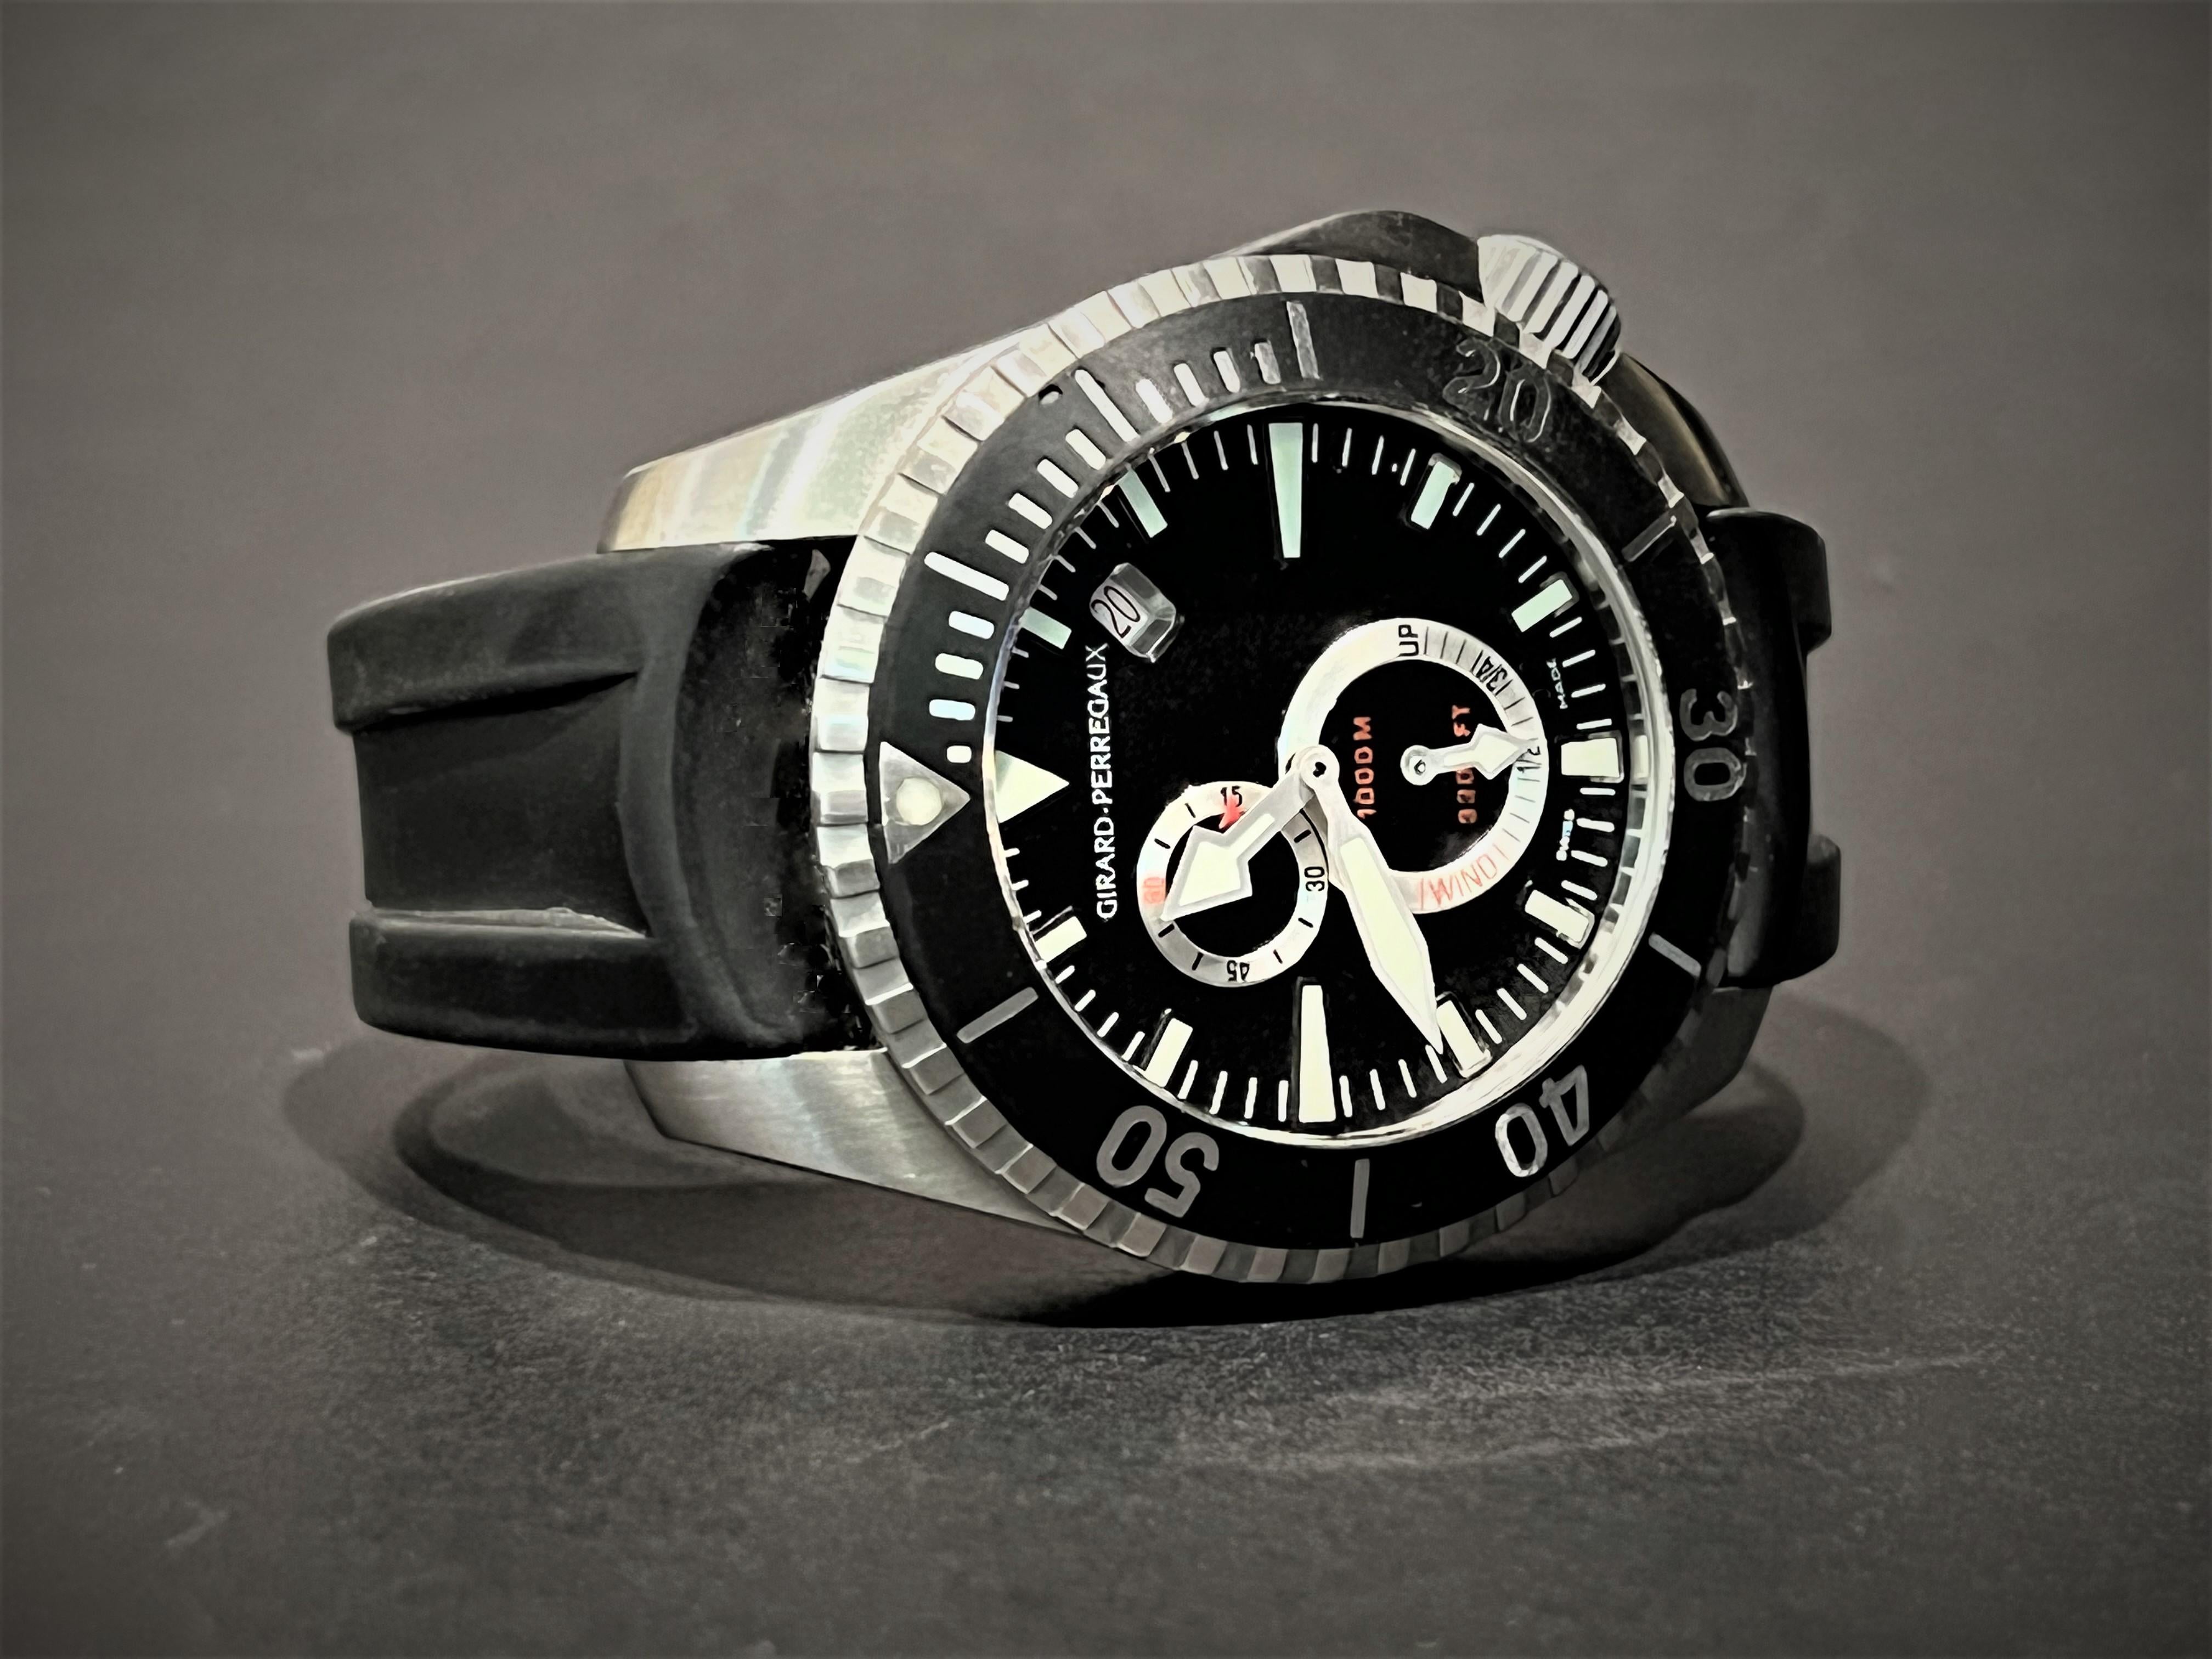 Girard Perregaux Sea Hawk 1000m Wristwatch In Good Condition For Sale In Bradford, Ontario